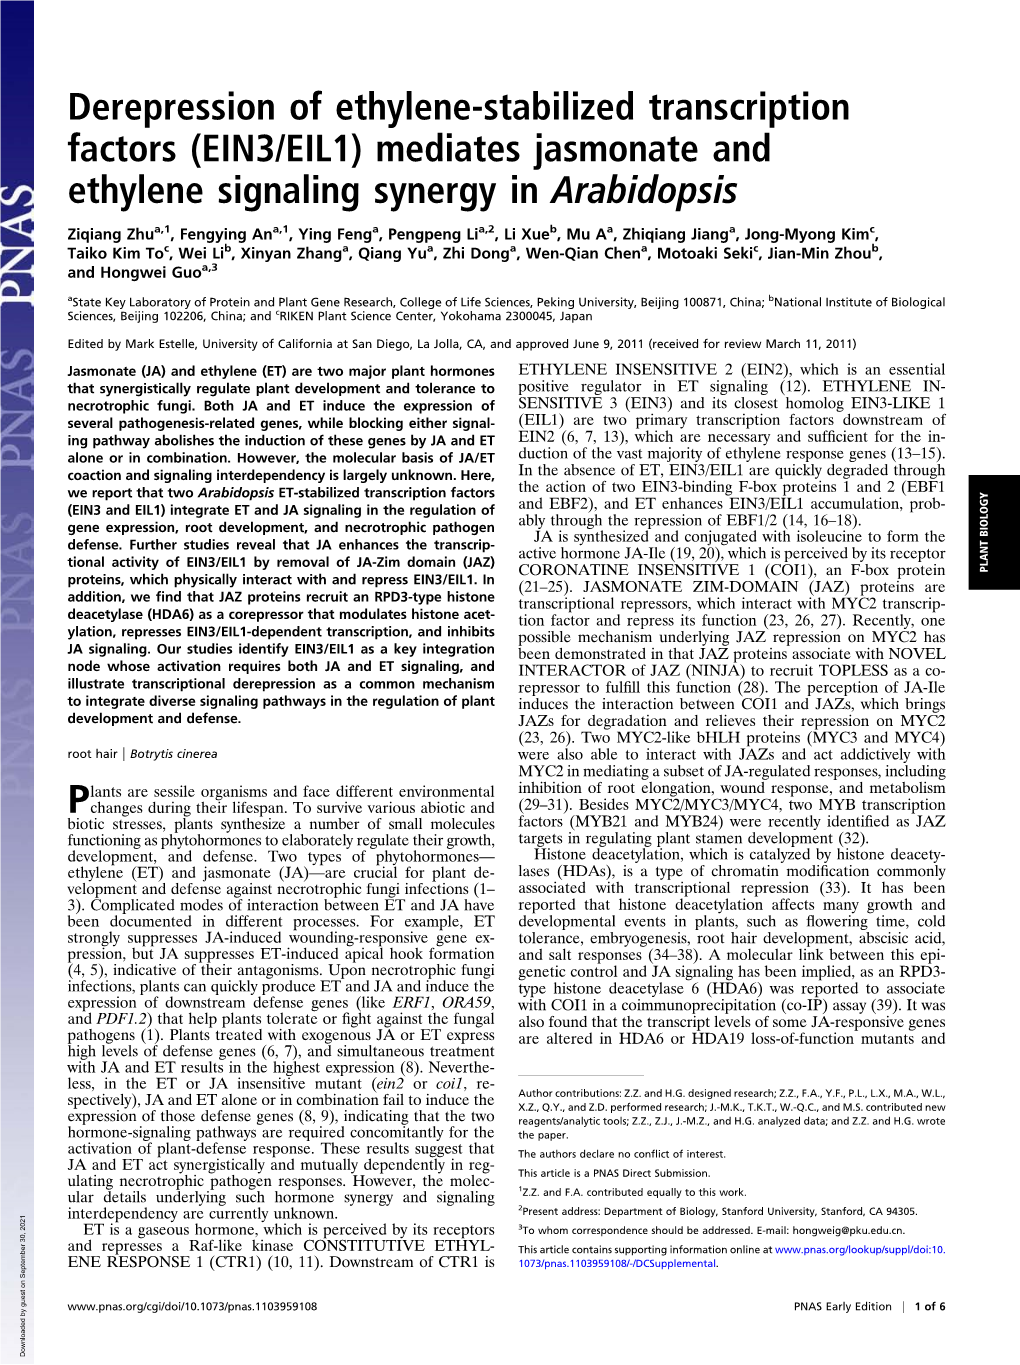 Derepression of Ethylene-Stabilized Transcription Factors (EIN3/EIL1) Mediates Jasmonate and Ethylene Signaling Synergy in Arabidopsis